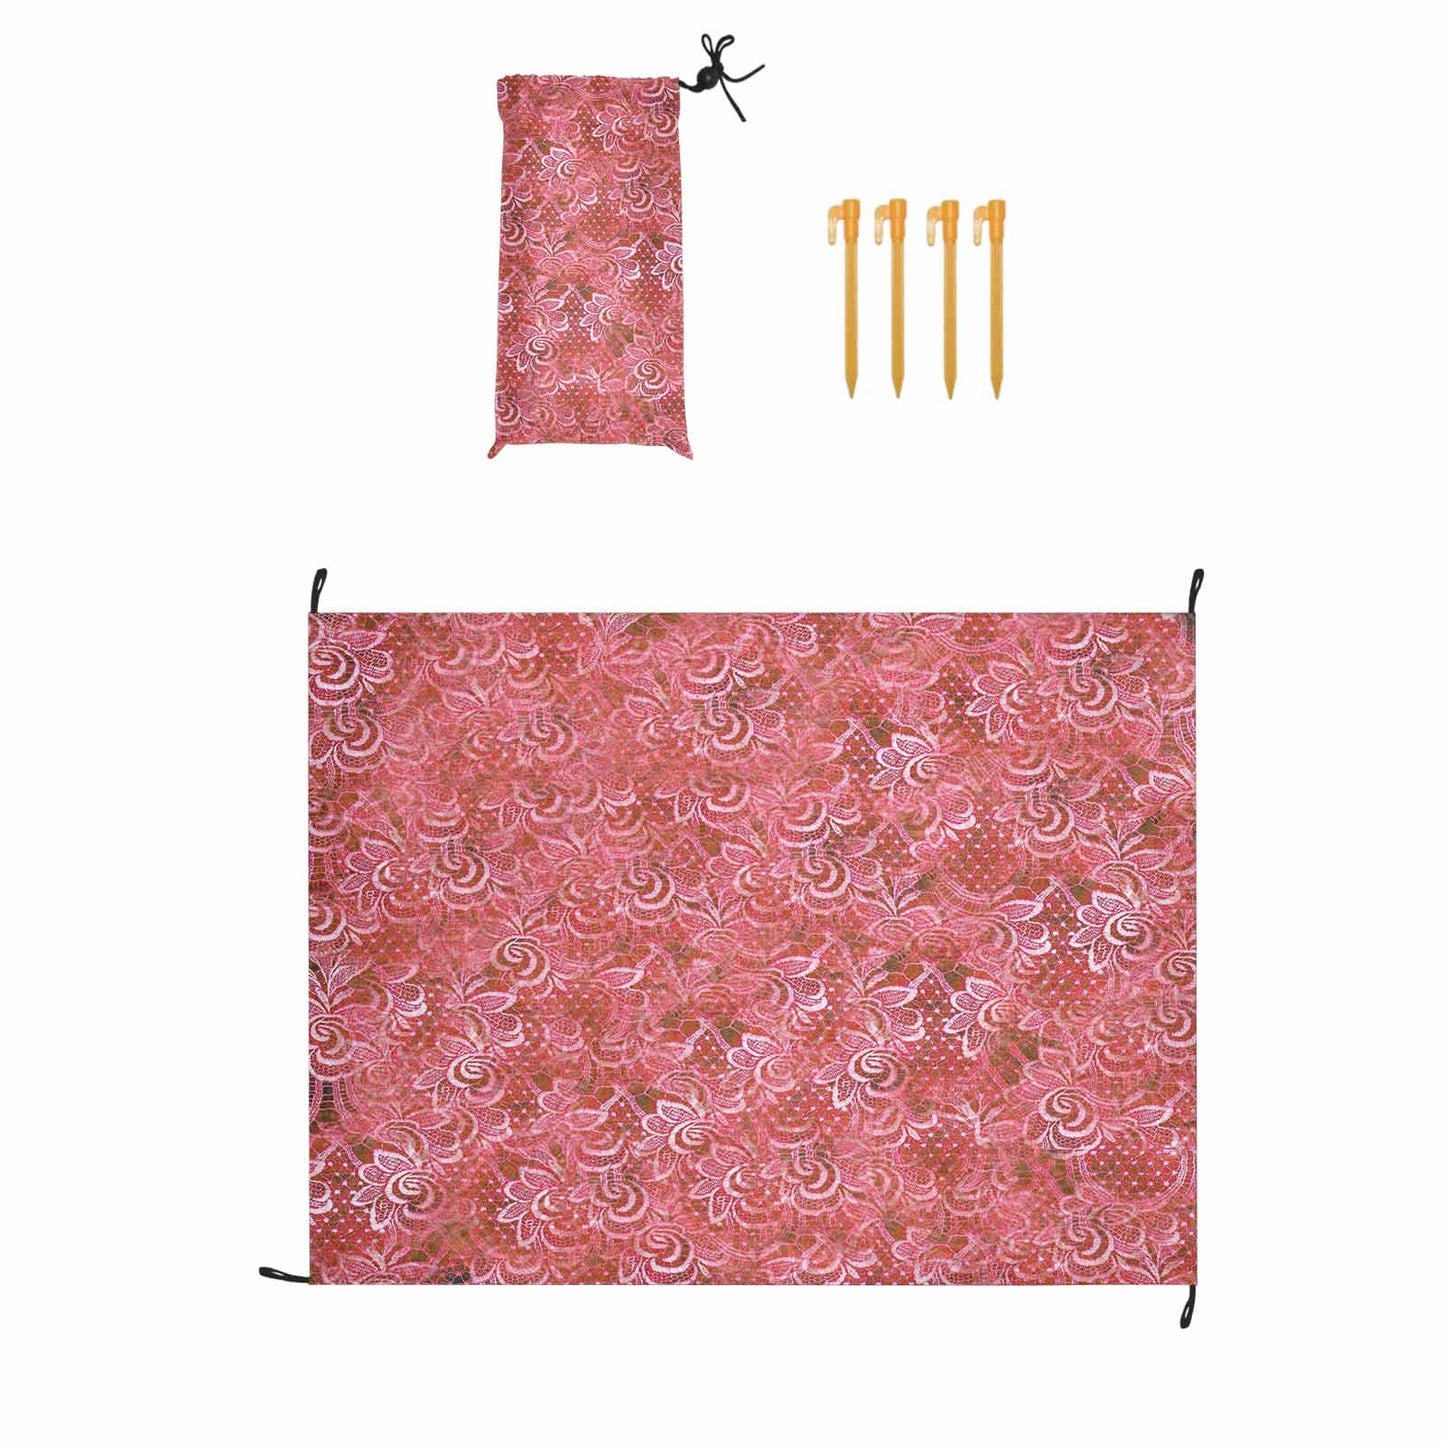 Victorian lace print waterproof picnic mat, 69 x 55in, design 33